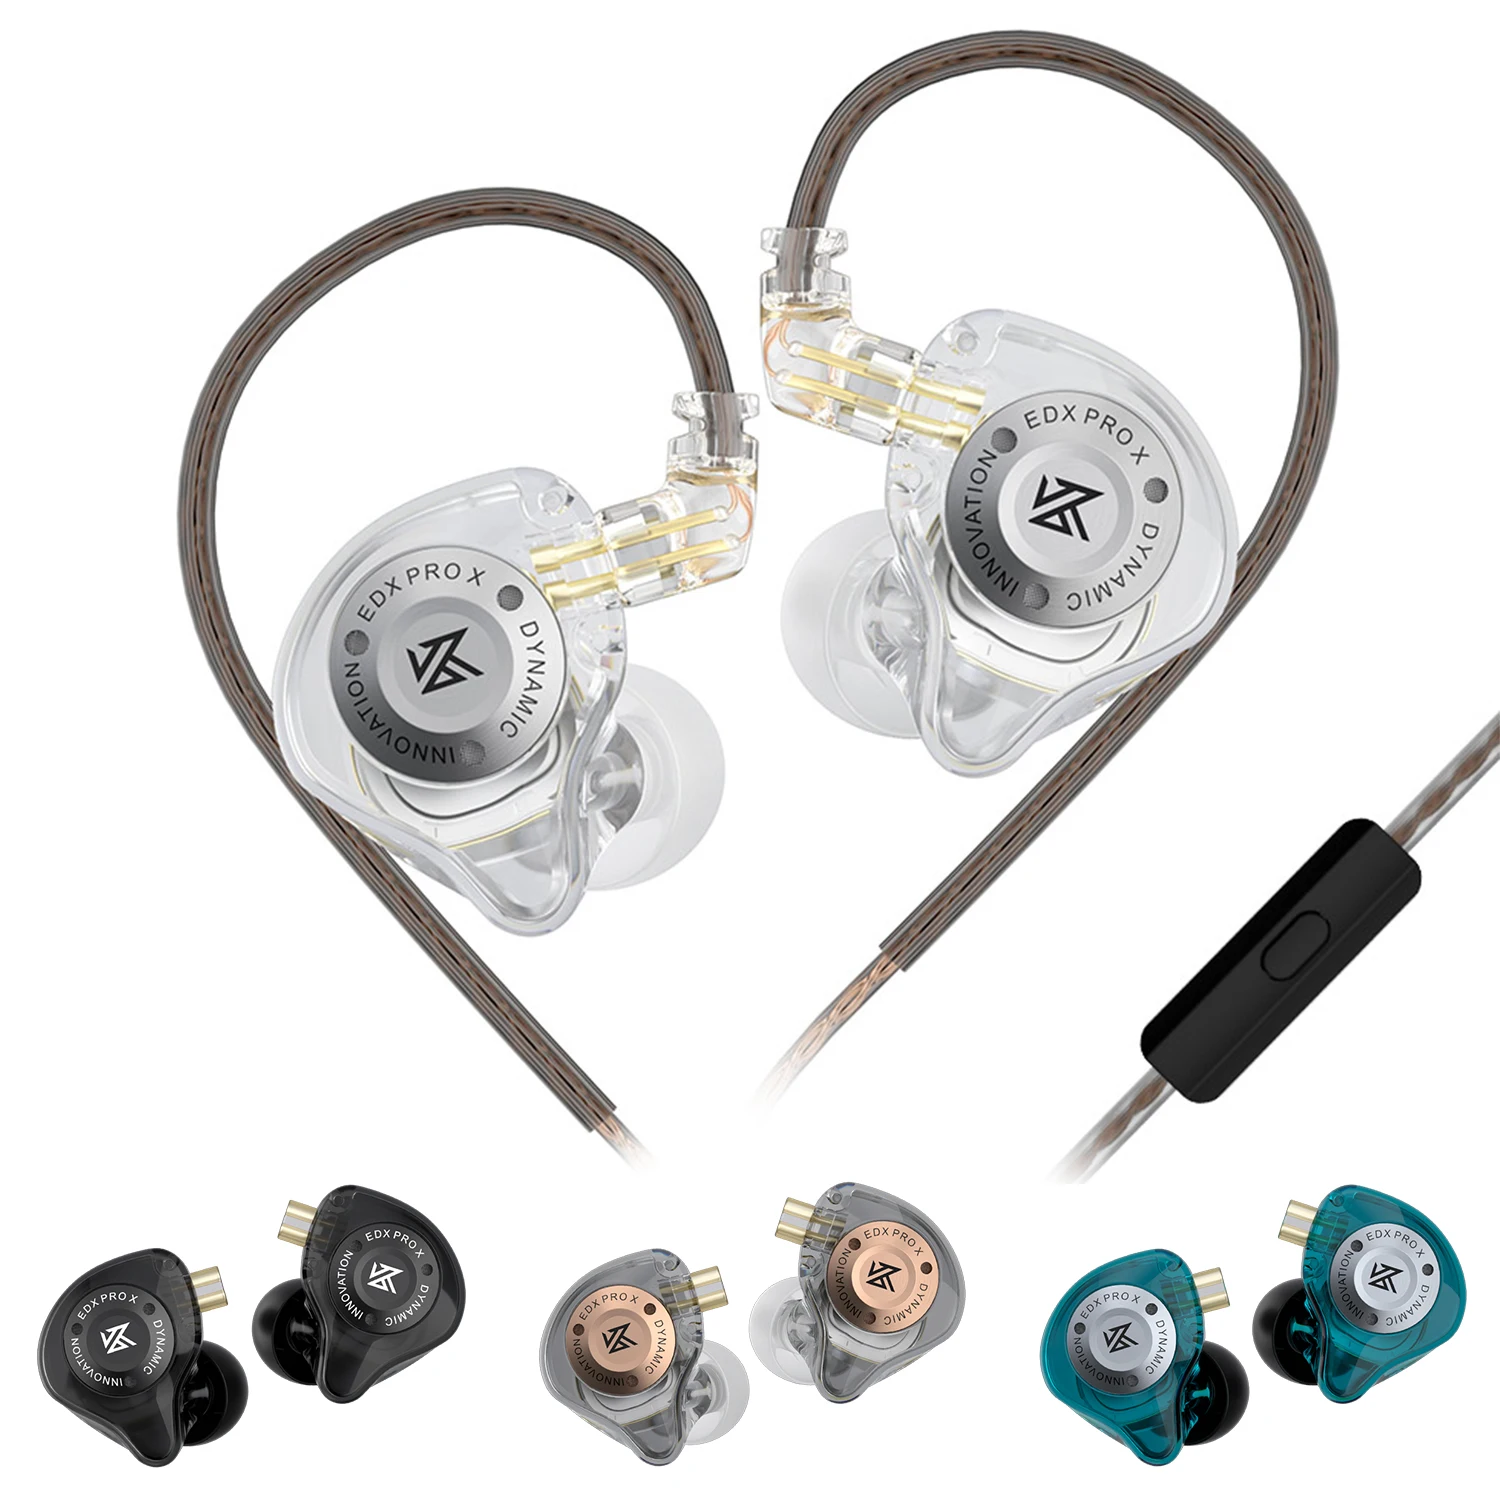 

KZ EDX PRO X TWS Earbuds Noise Cancelling in Ear Wired Music Handsfree Buds Earphones Wireless Gaming Headset Headphone